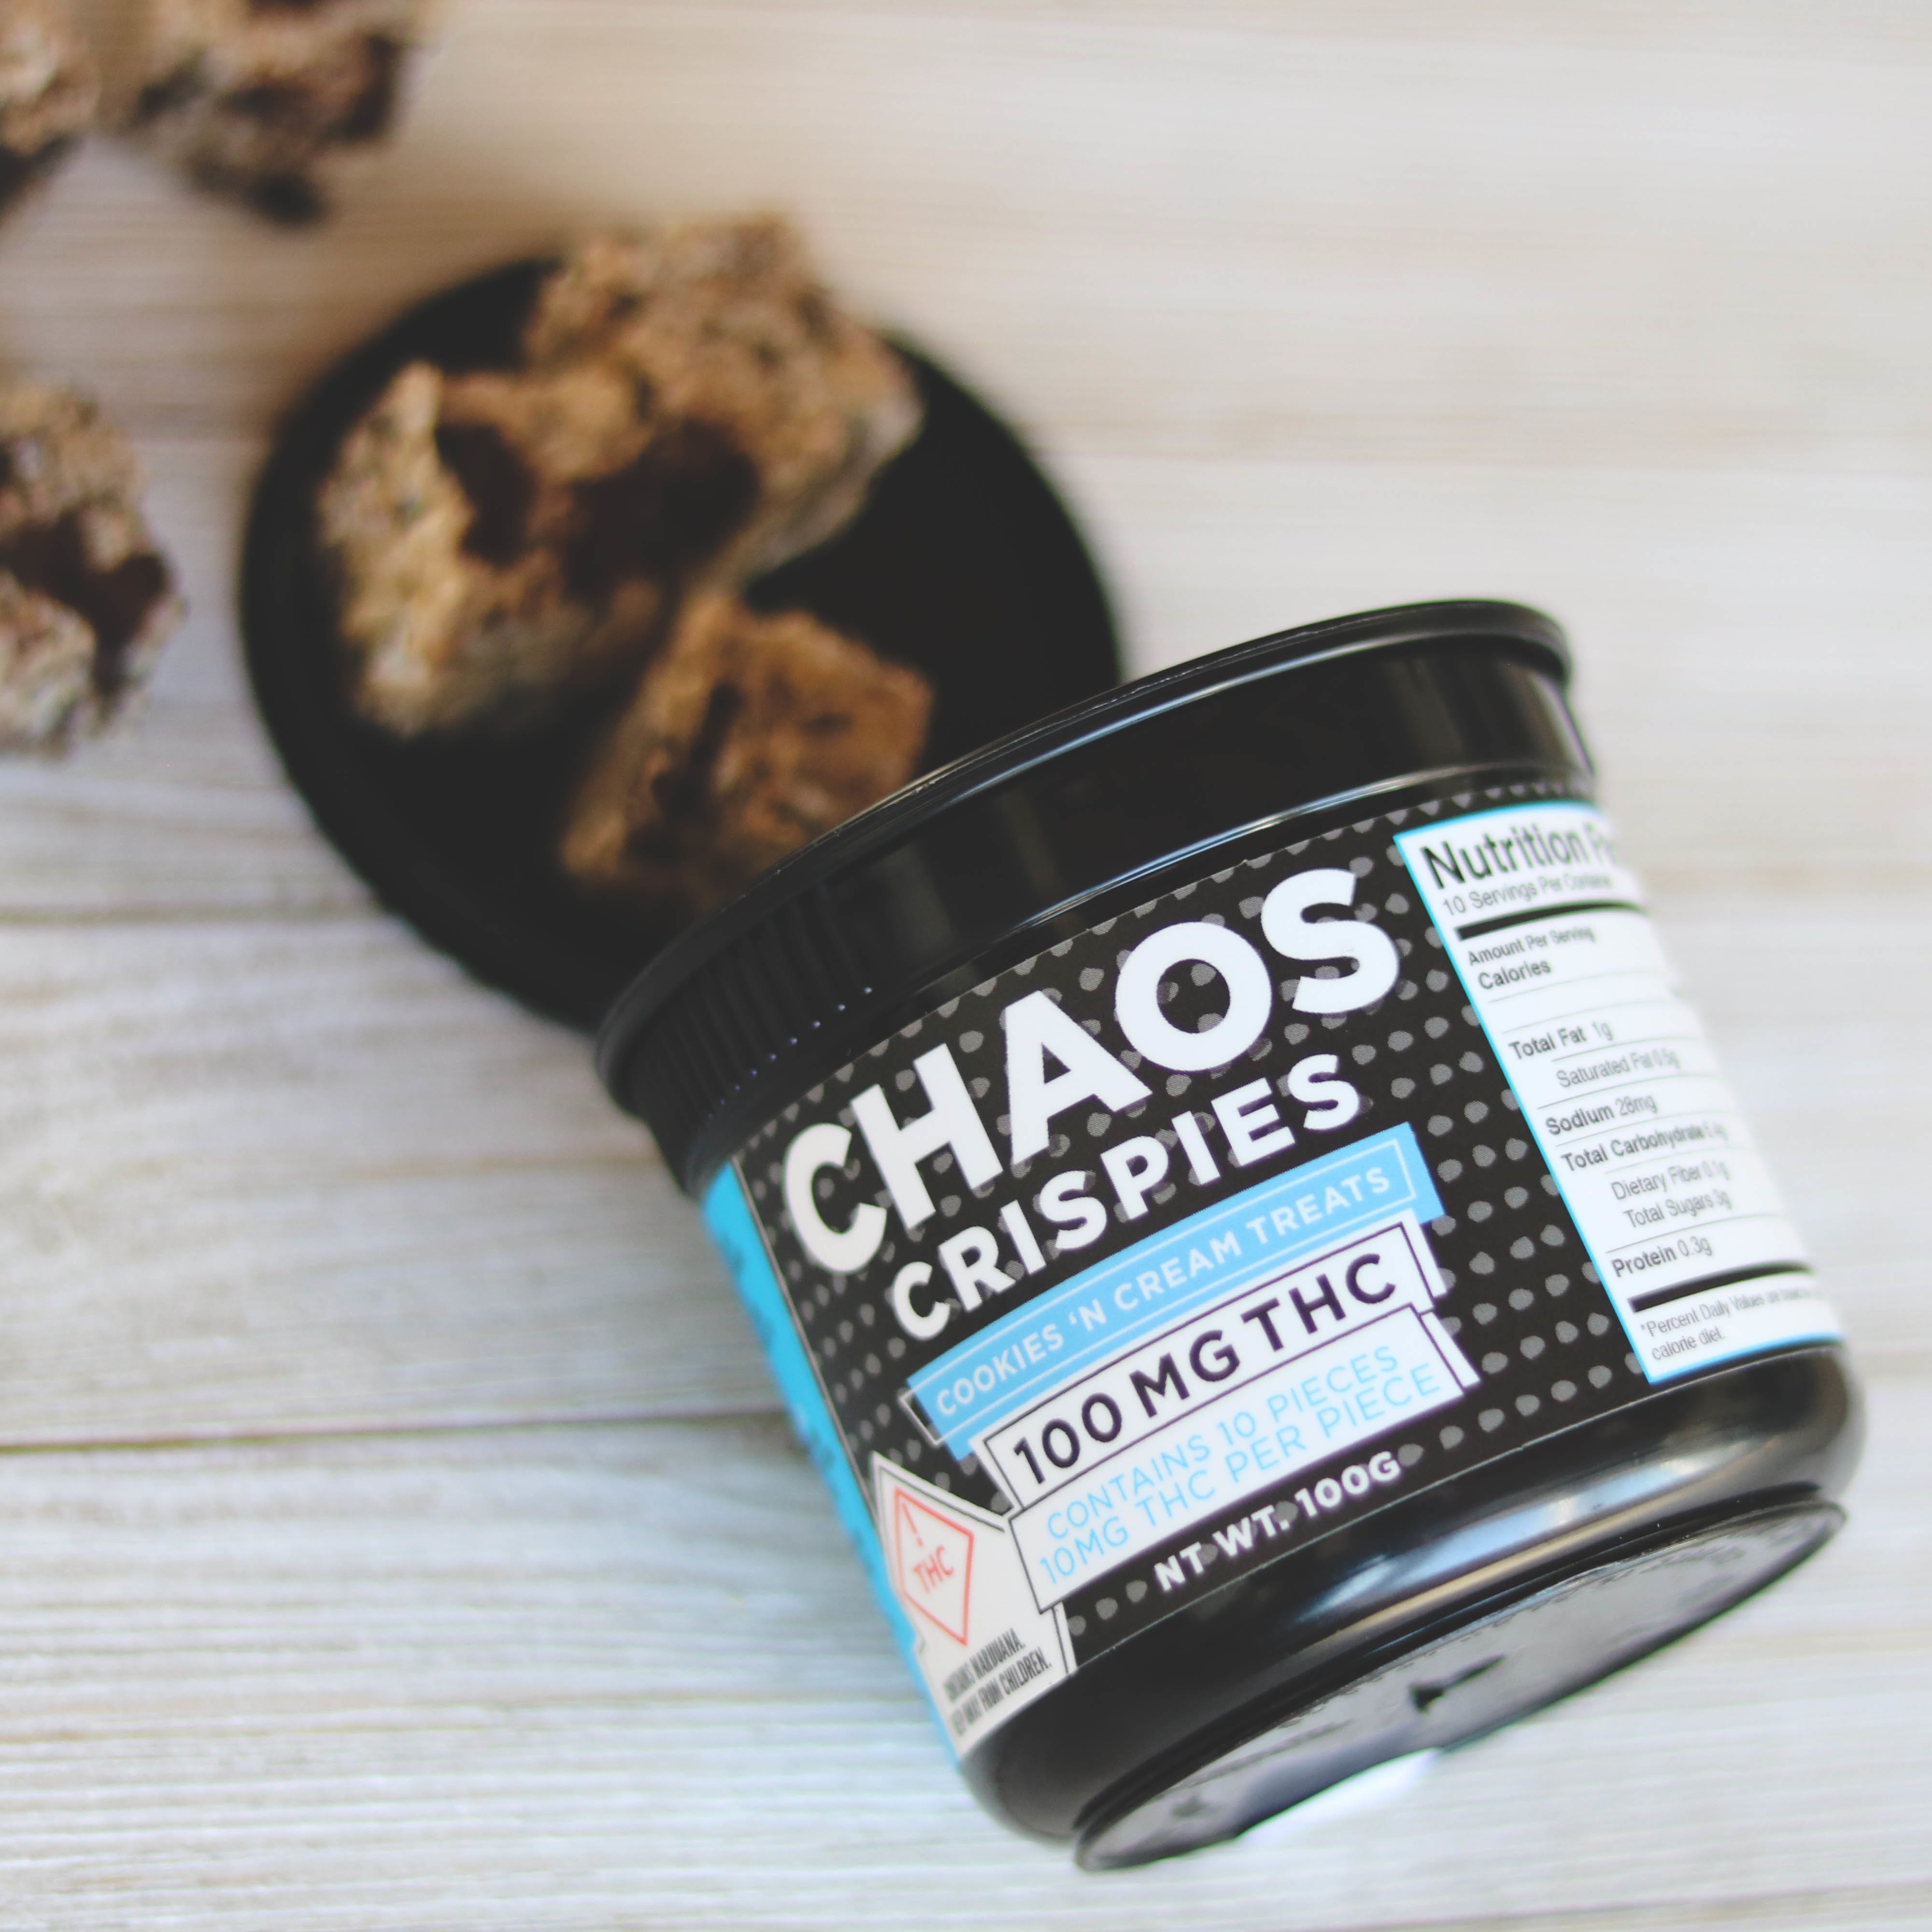 Chaos Crispies - Cookies and Cream Crispy Treat